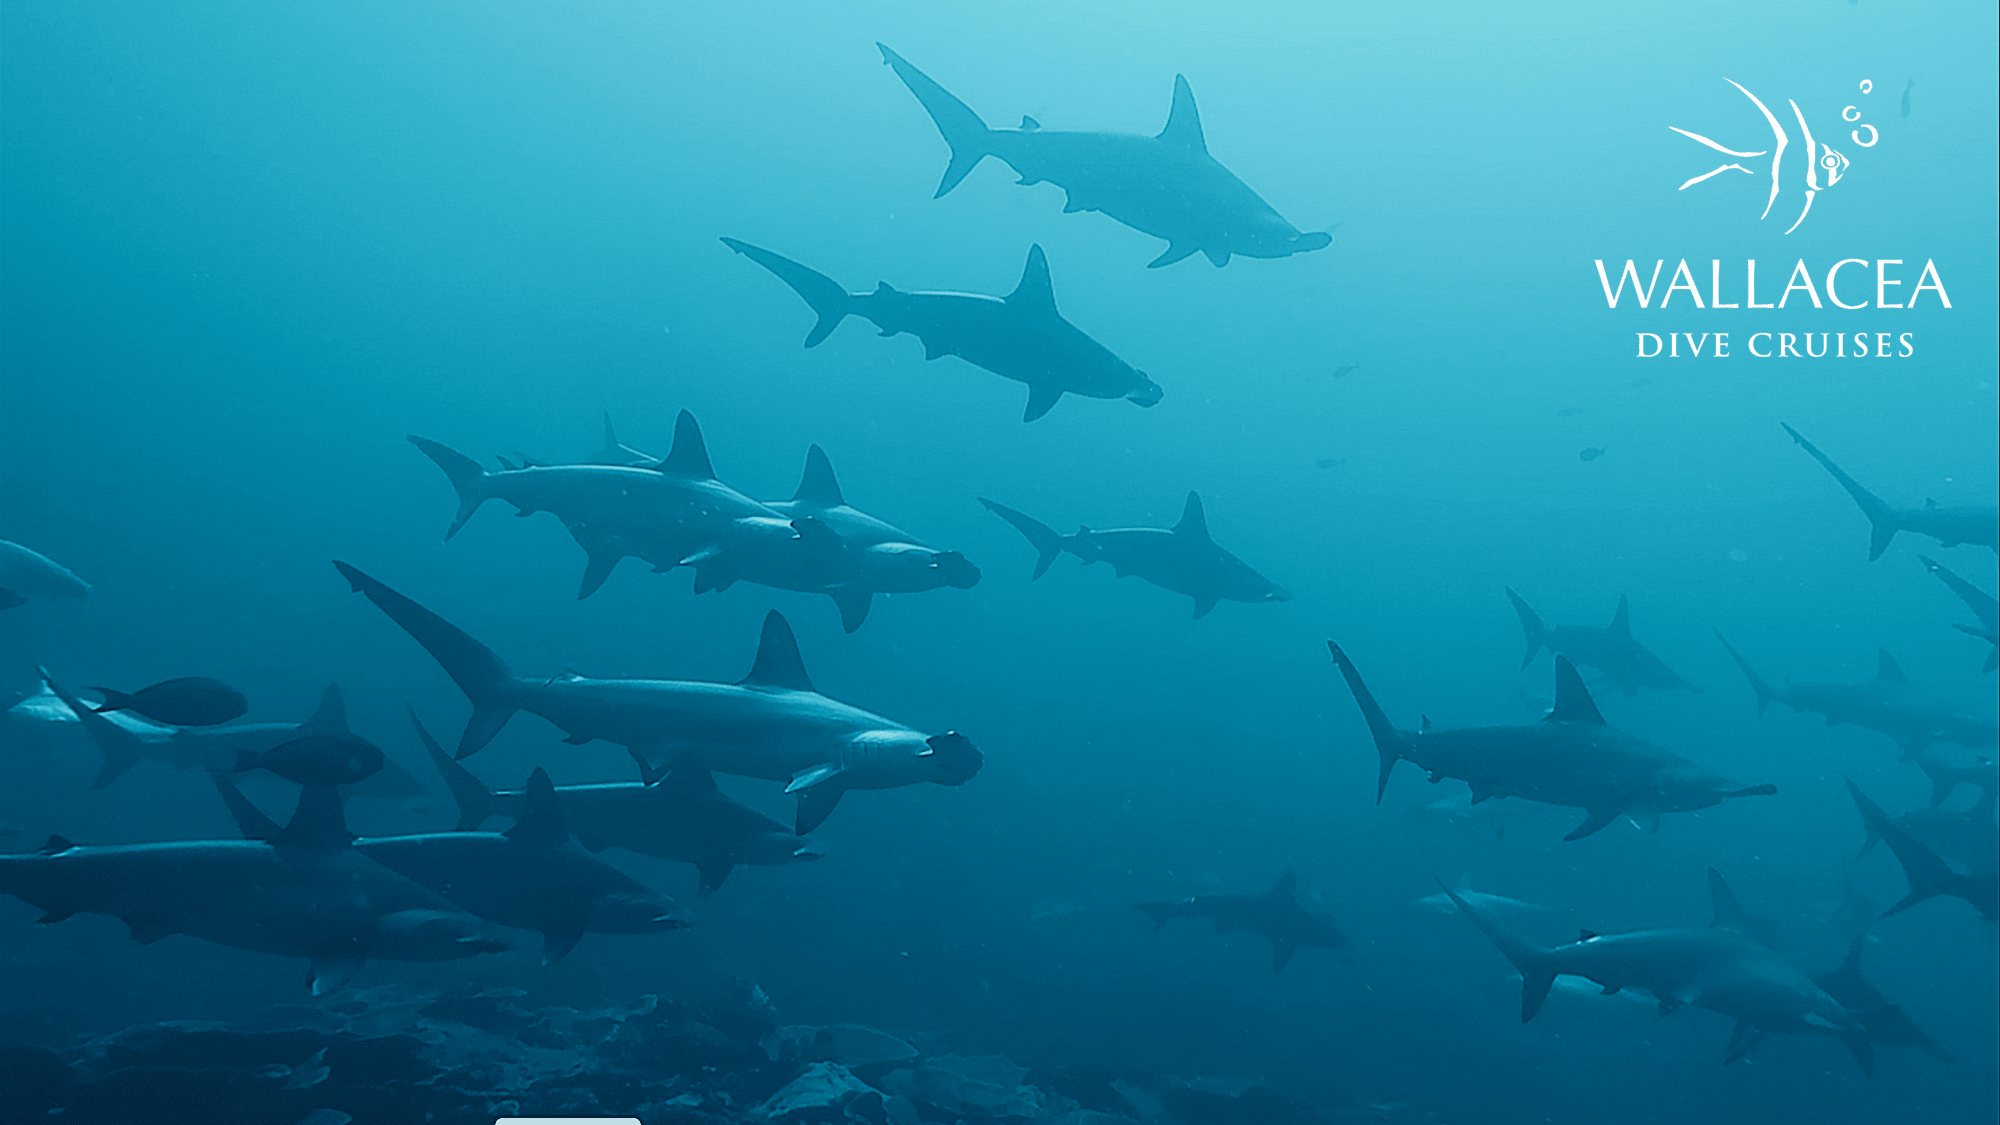 School of hammerhead sharks - Banda Sea diving - Forgotten Islands - Indonesia